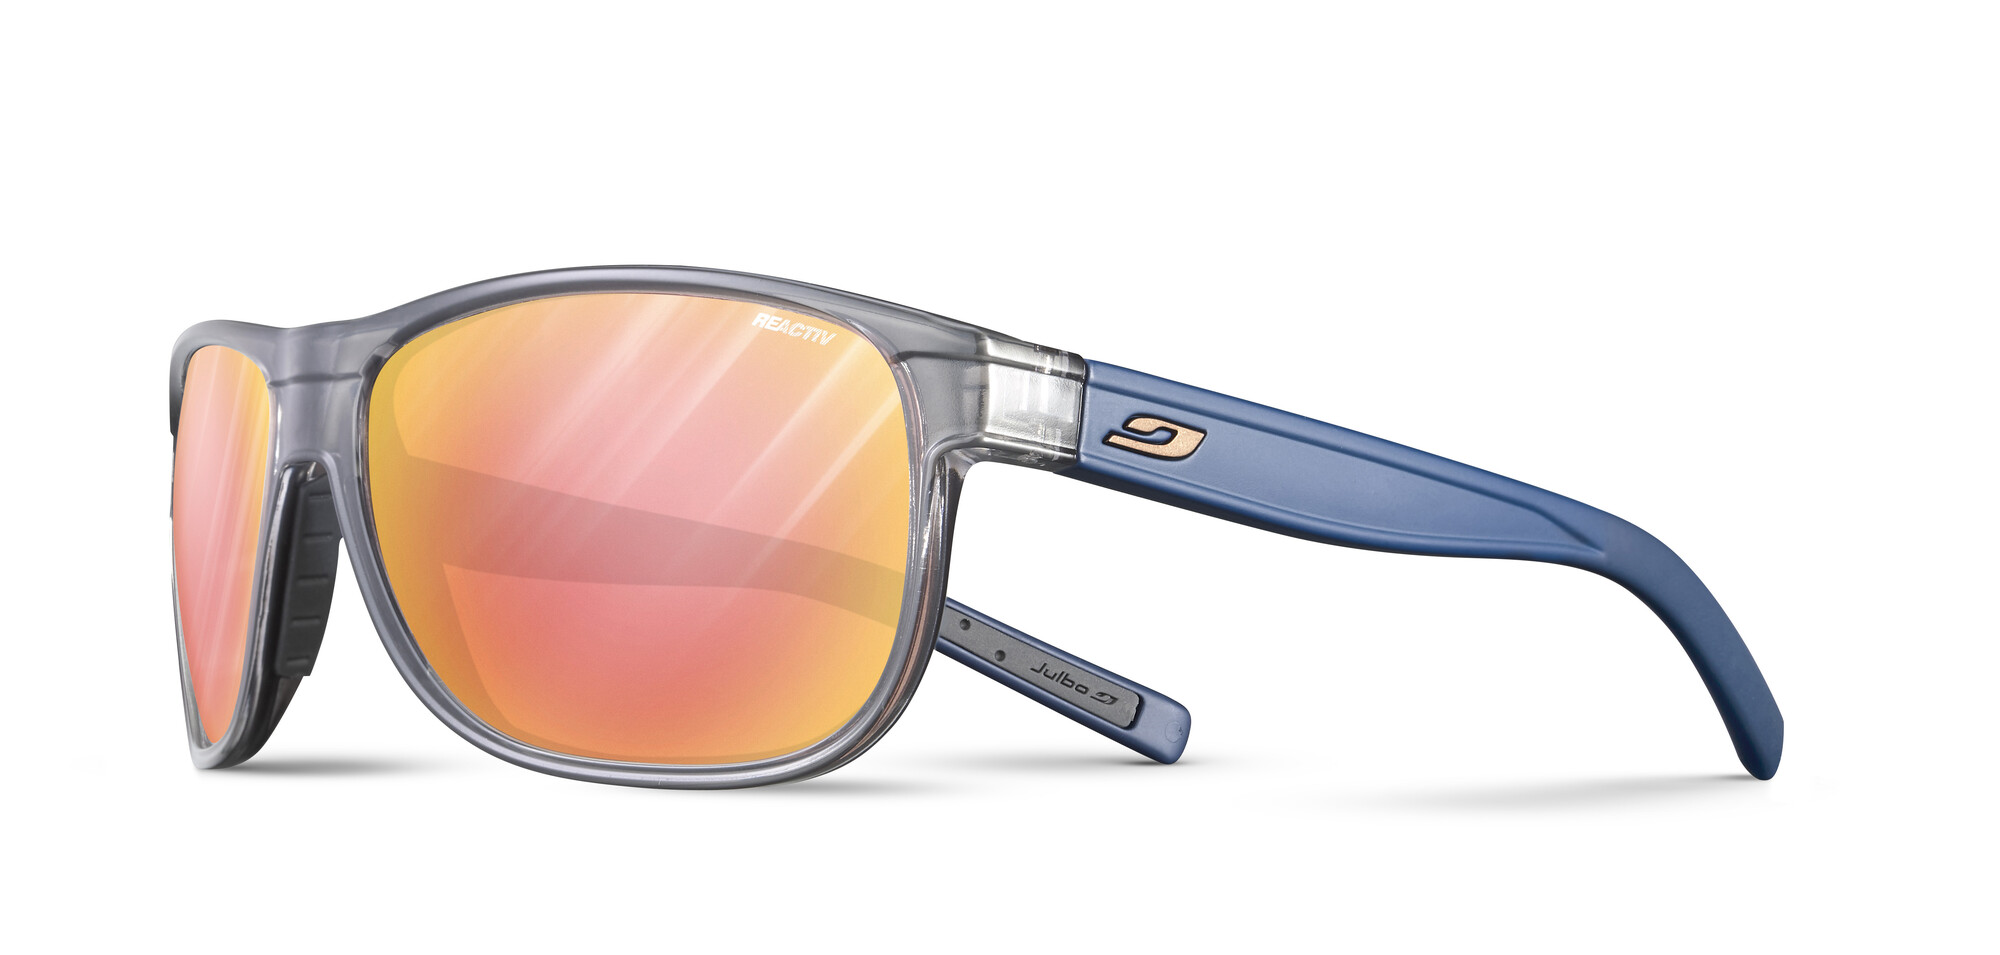 Julbo - UV Sunglasses for adults - Renegade M - Reactiv 2-3 glare control - Grey & blue